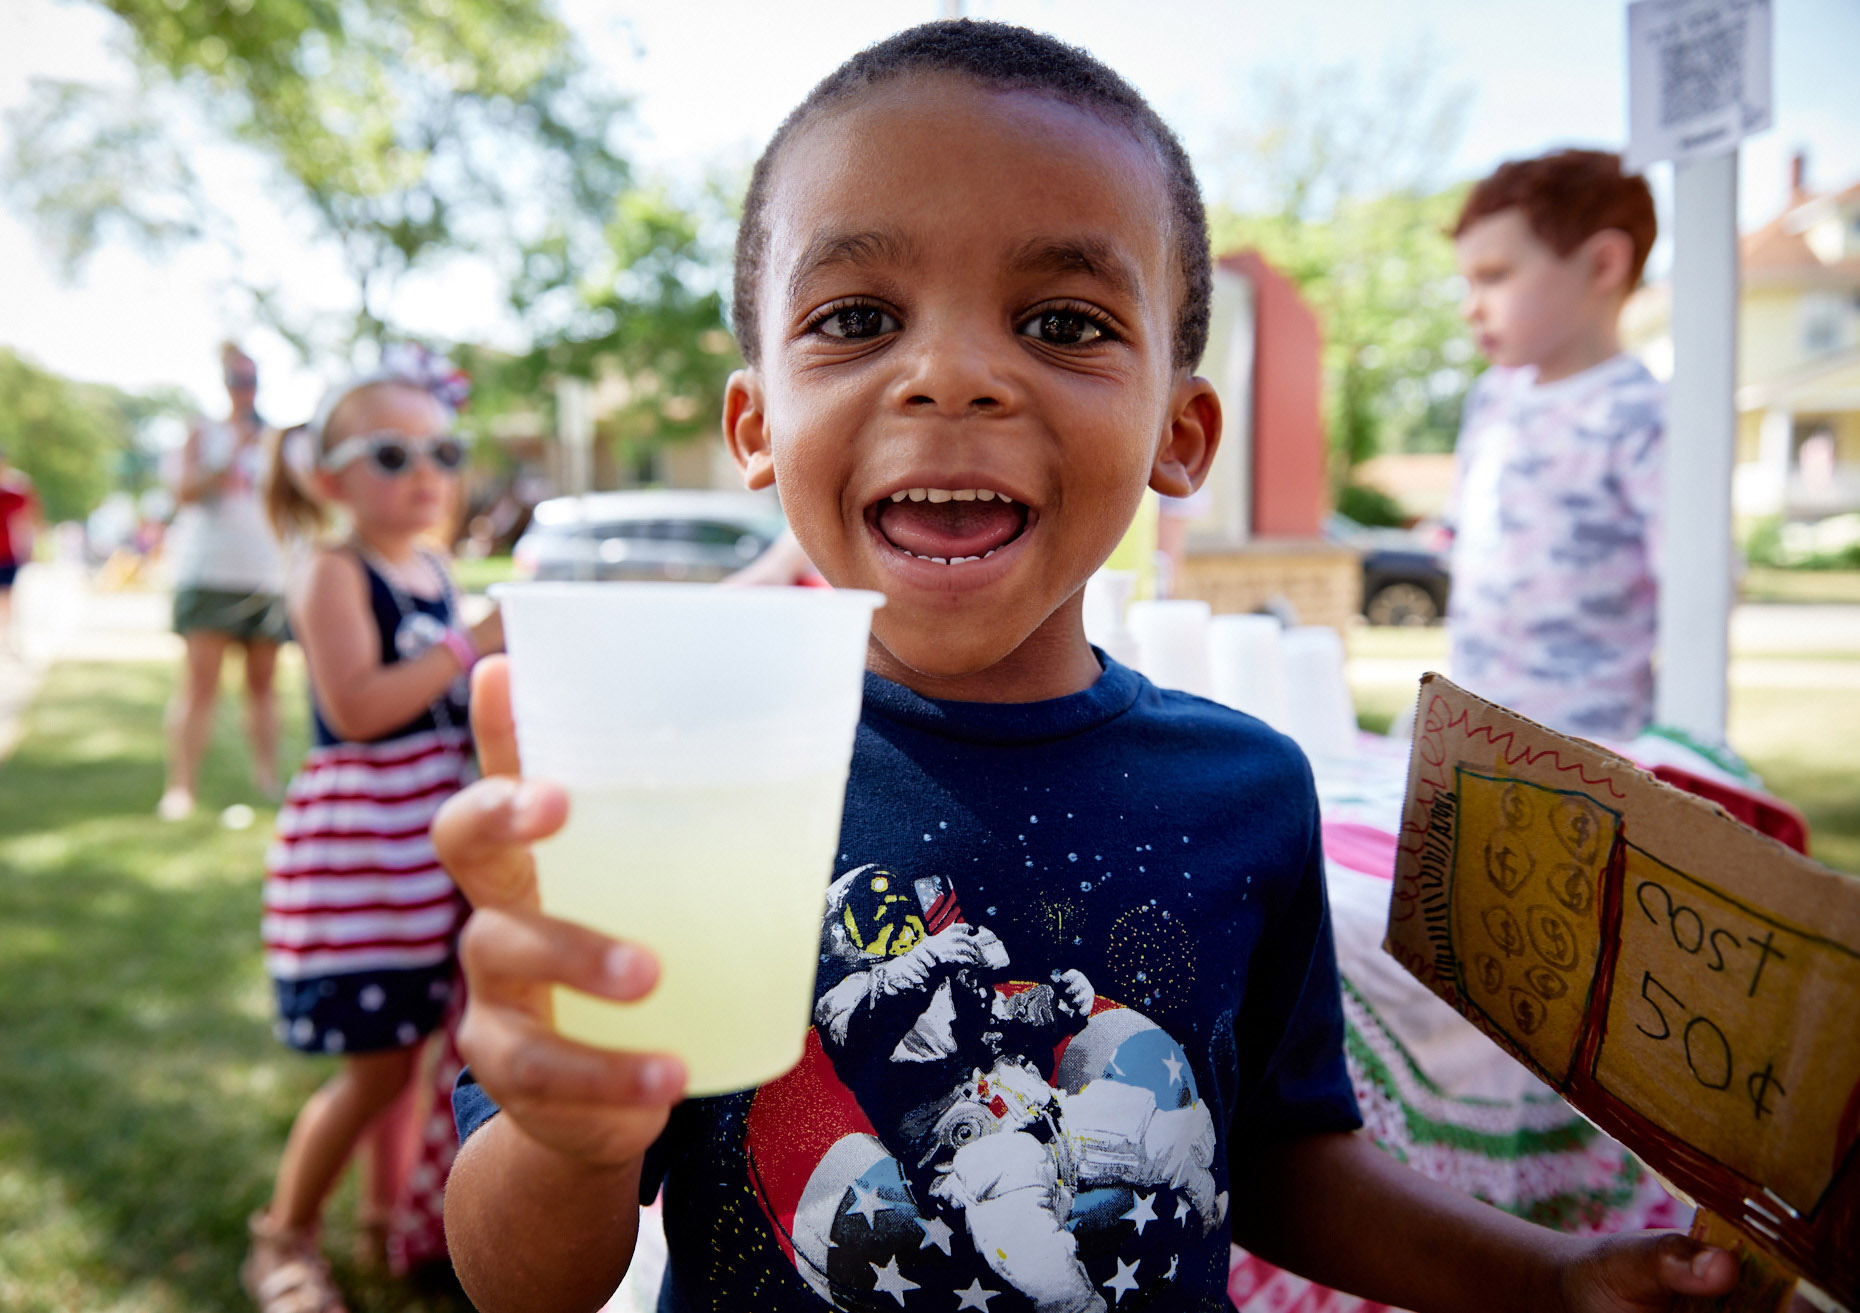 Boy drinking lemonade at festival | Childrens photography by Saverio Truglia